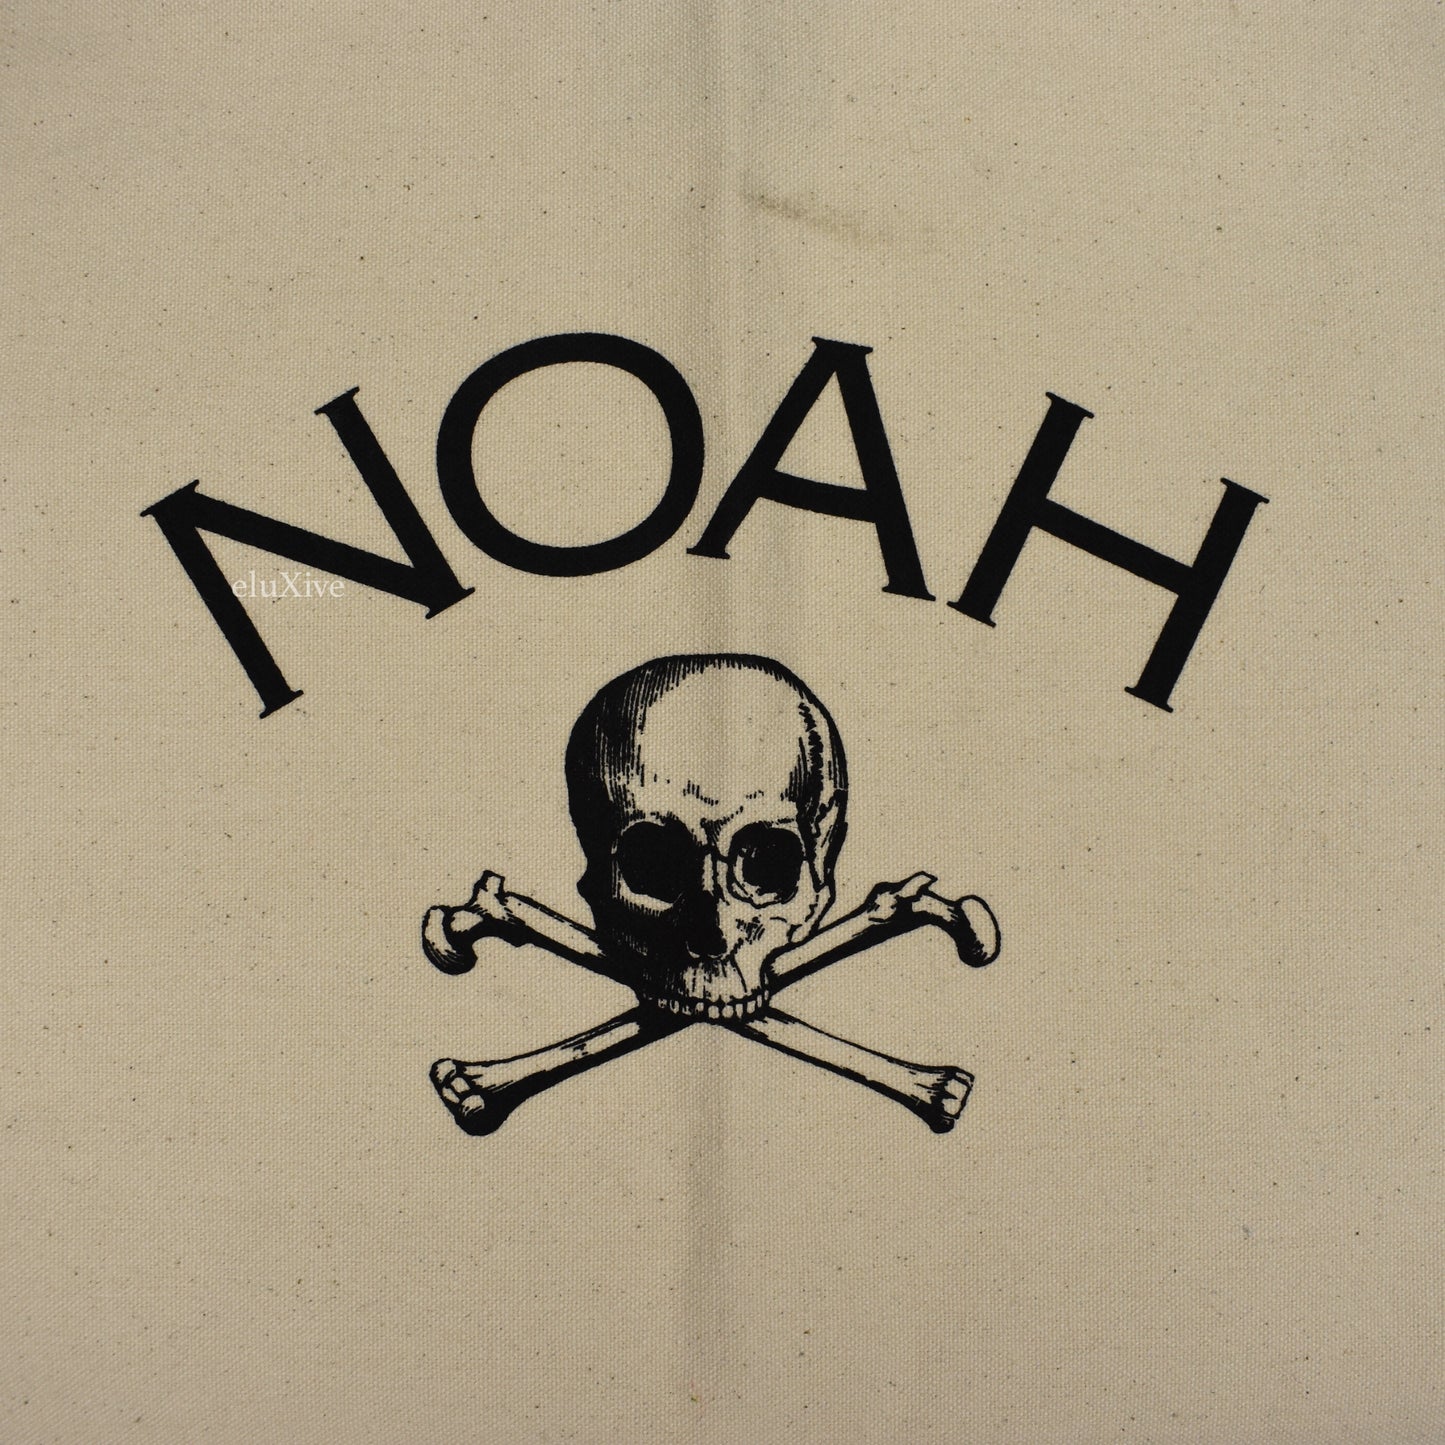 Noah x Sperry - Jolly Roger Logo Tote Bag (Beige)